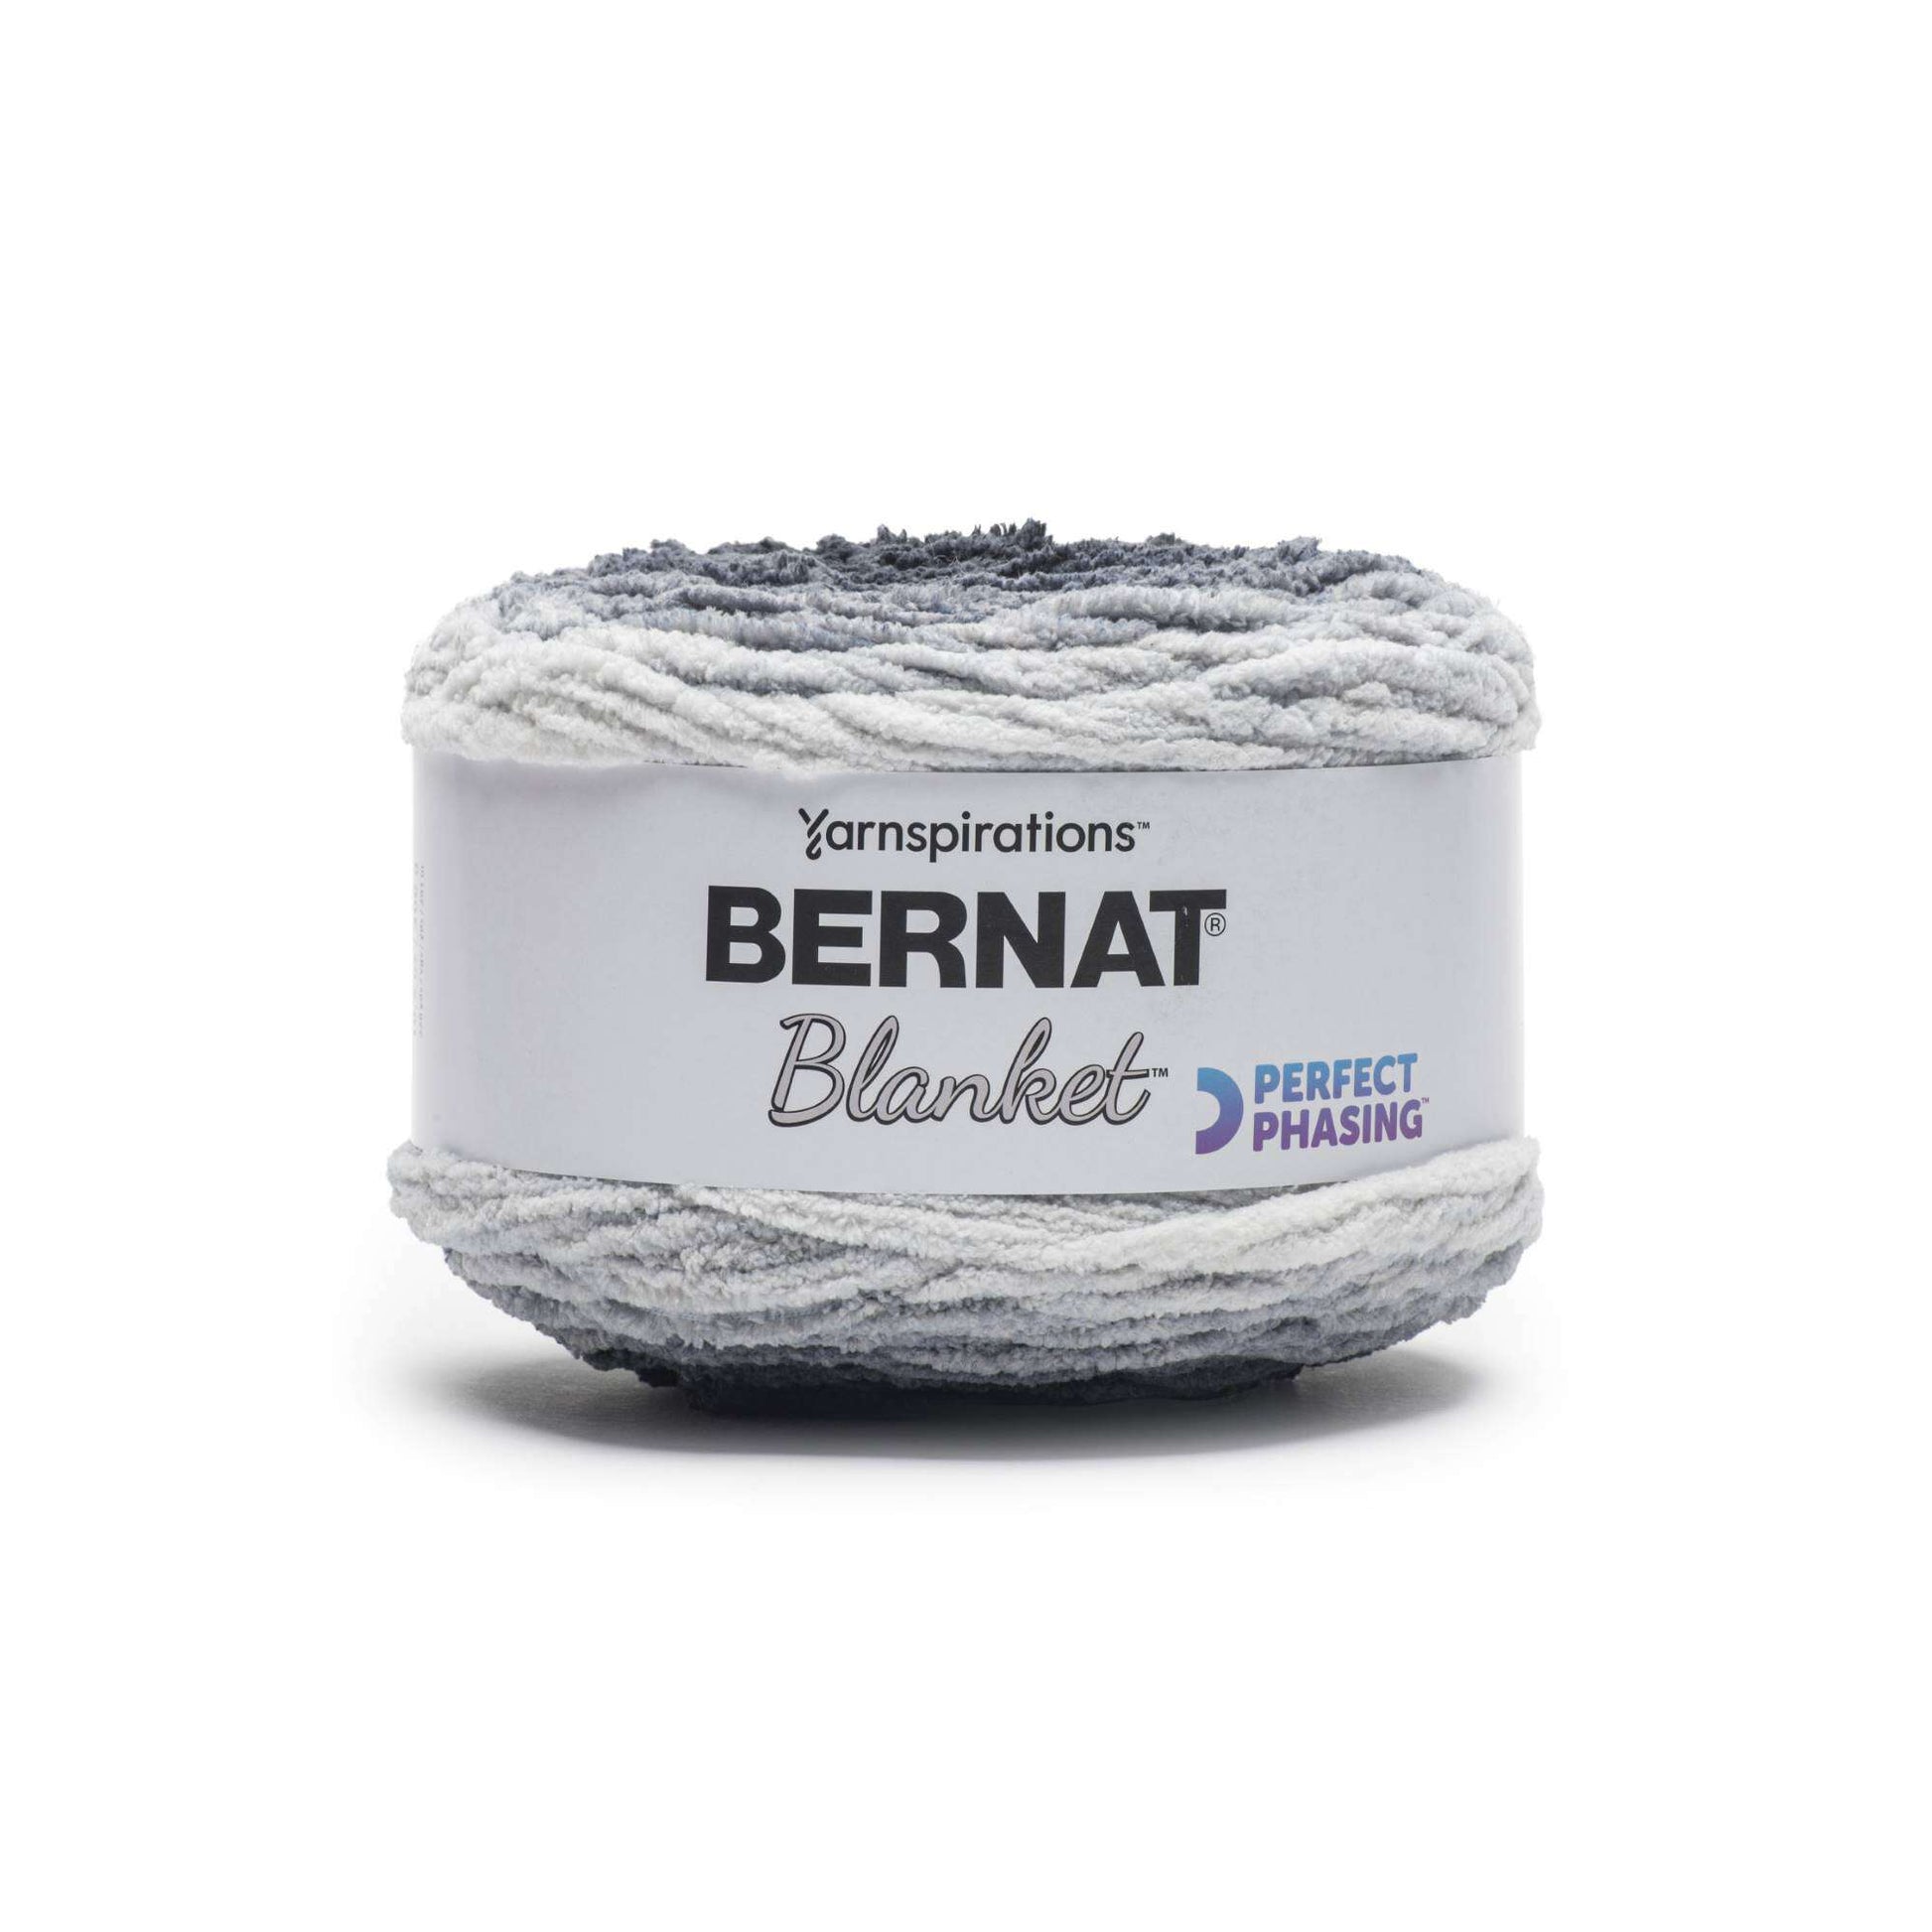 Bernat Blanket Yarn (300g/10.5oz), Yarnspirations